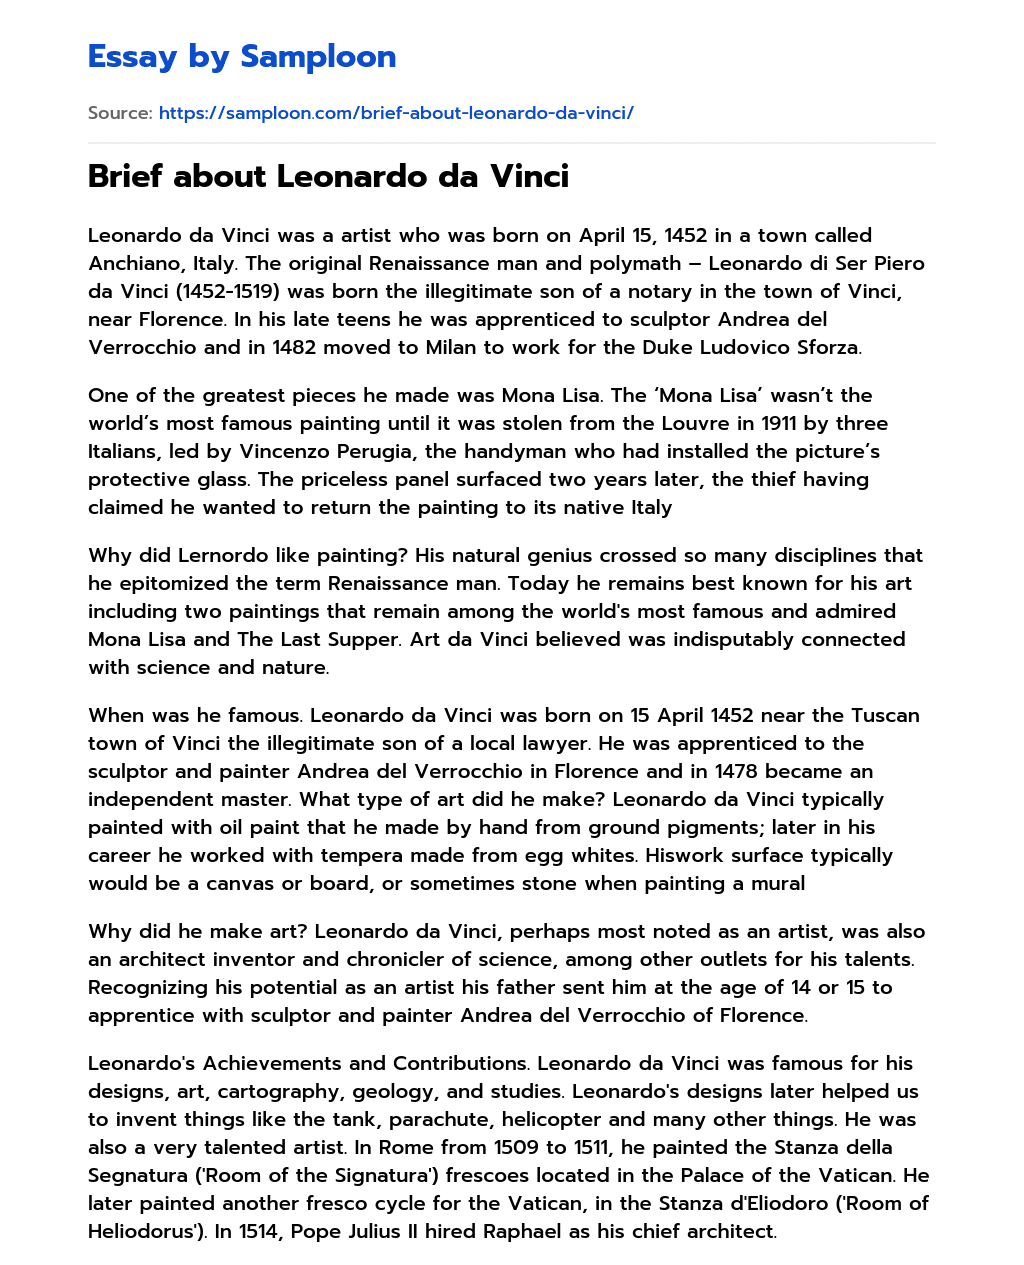 Brief about Leonardo da Vinci essay